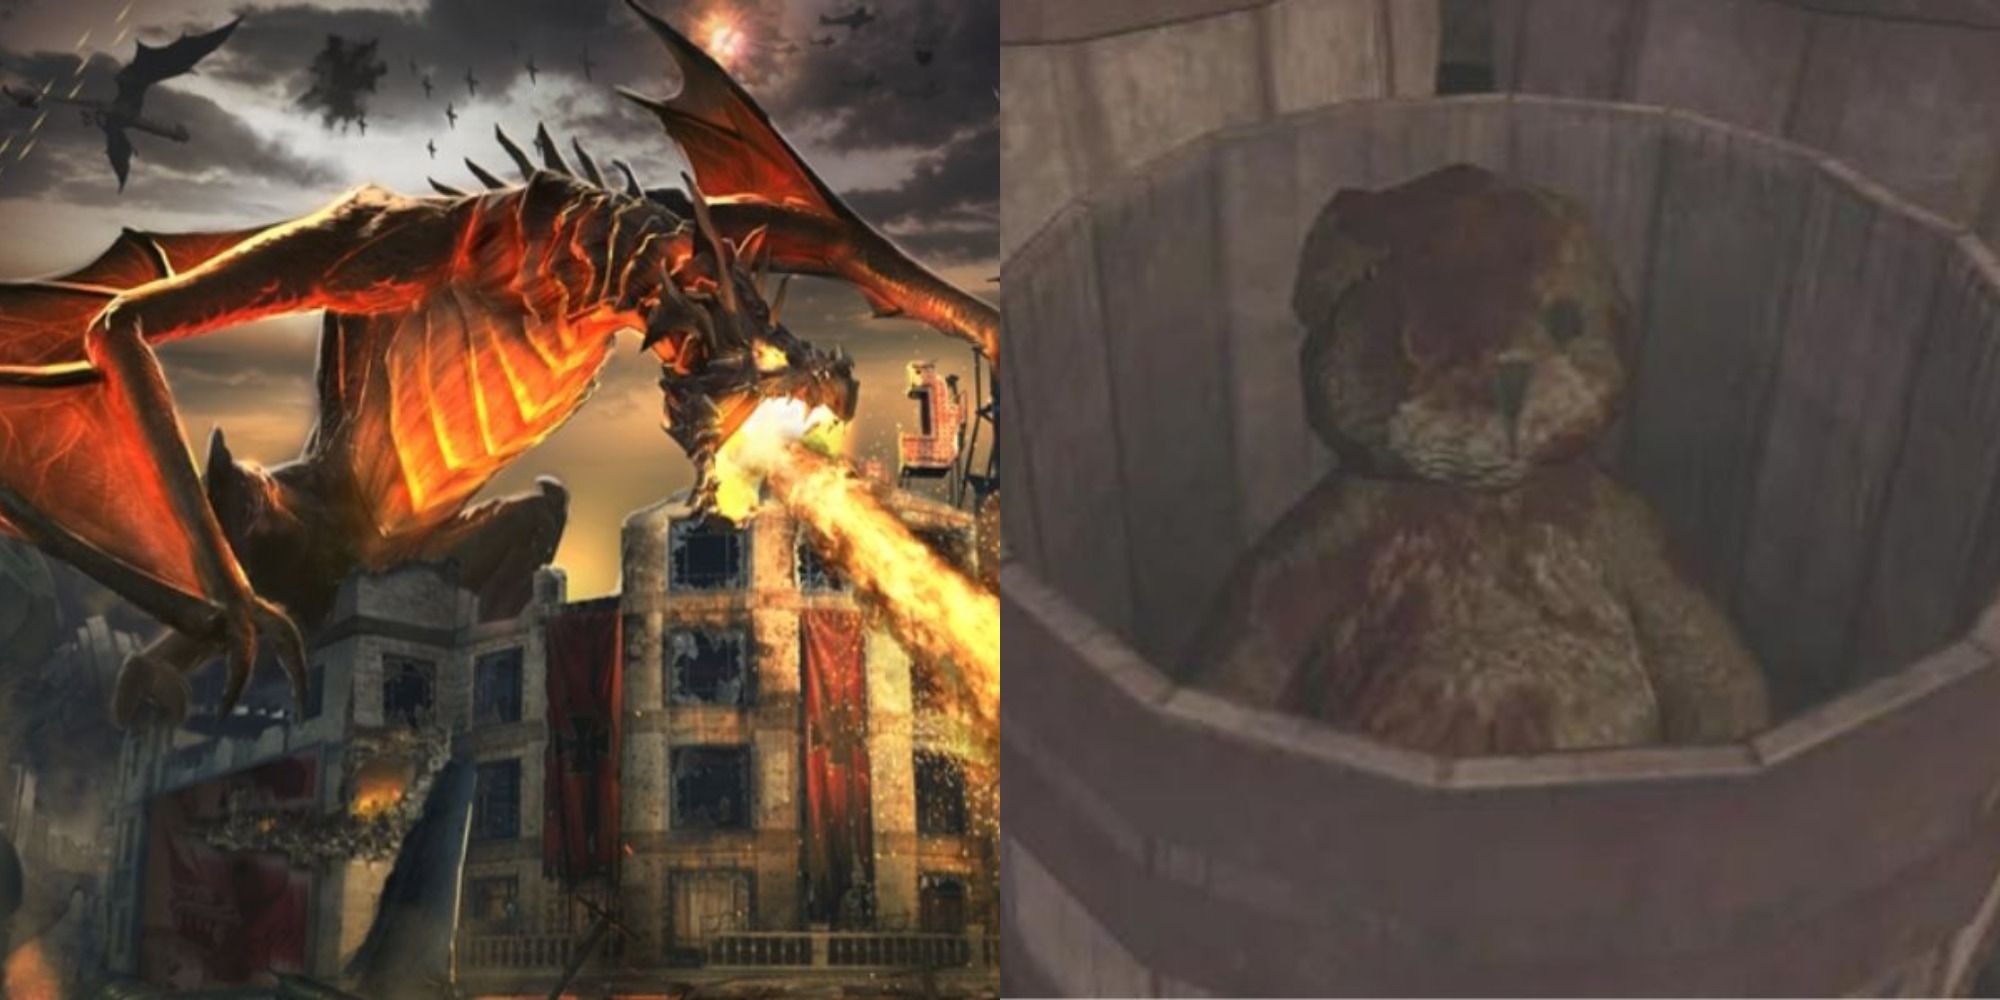 Split image depicting a fire-breathing dragon and a bloody teddy bear inside a barrel